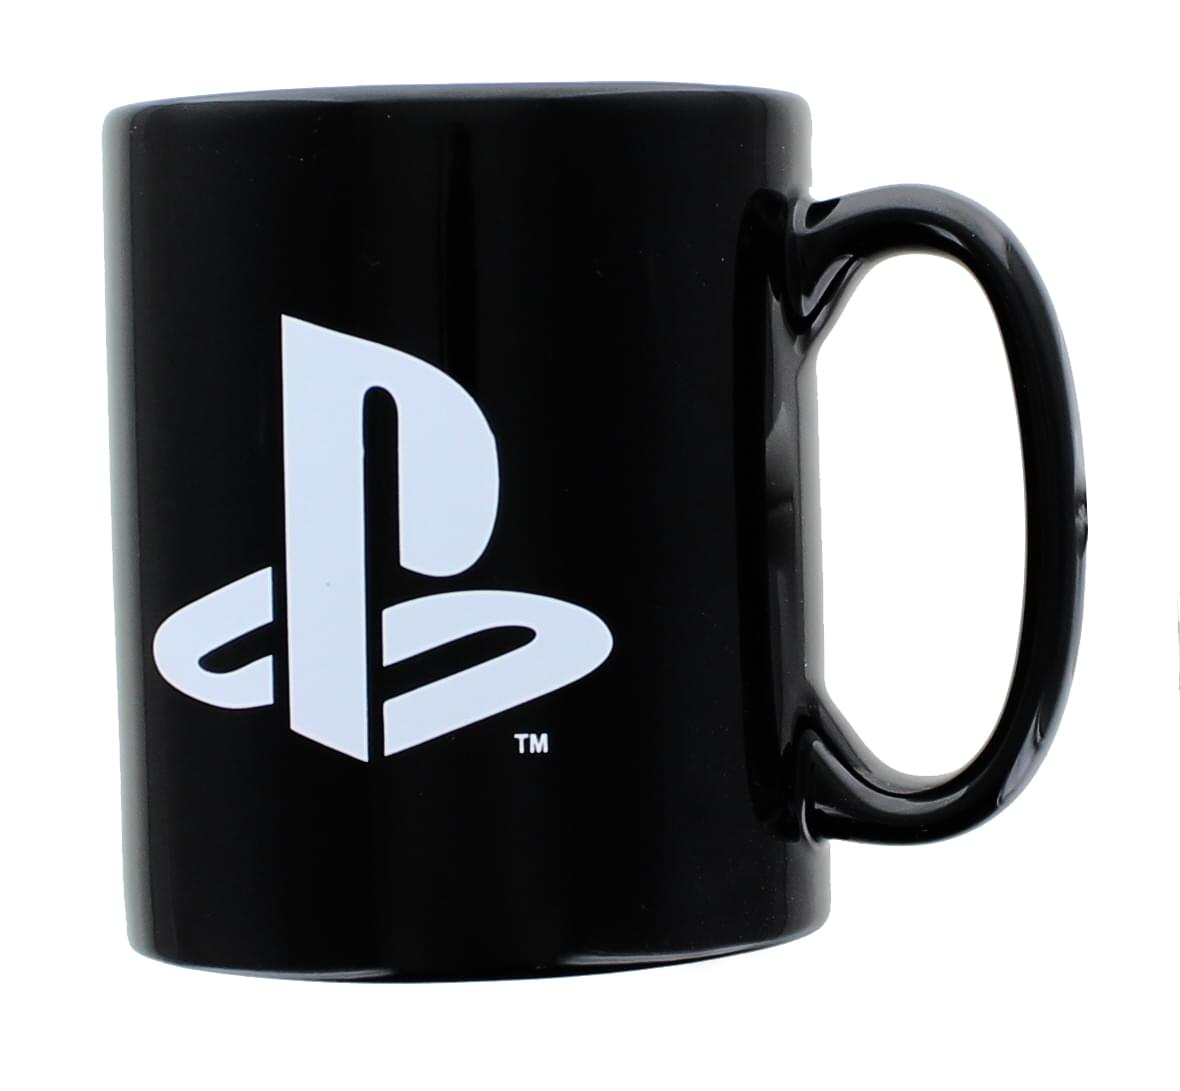 PlayStation Logo and Icons Black Ceramic Coffee Mug - image 2 of 3